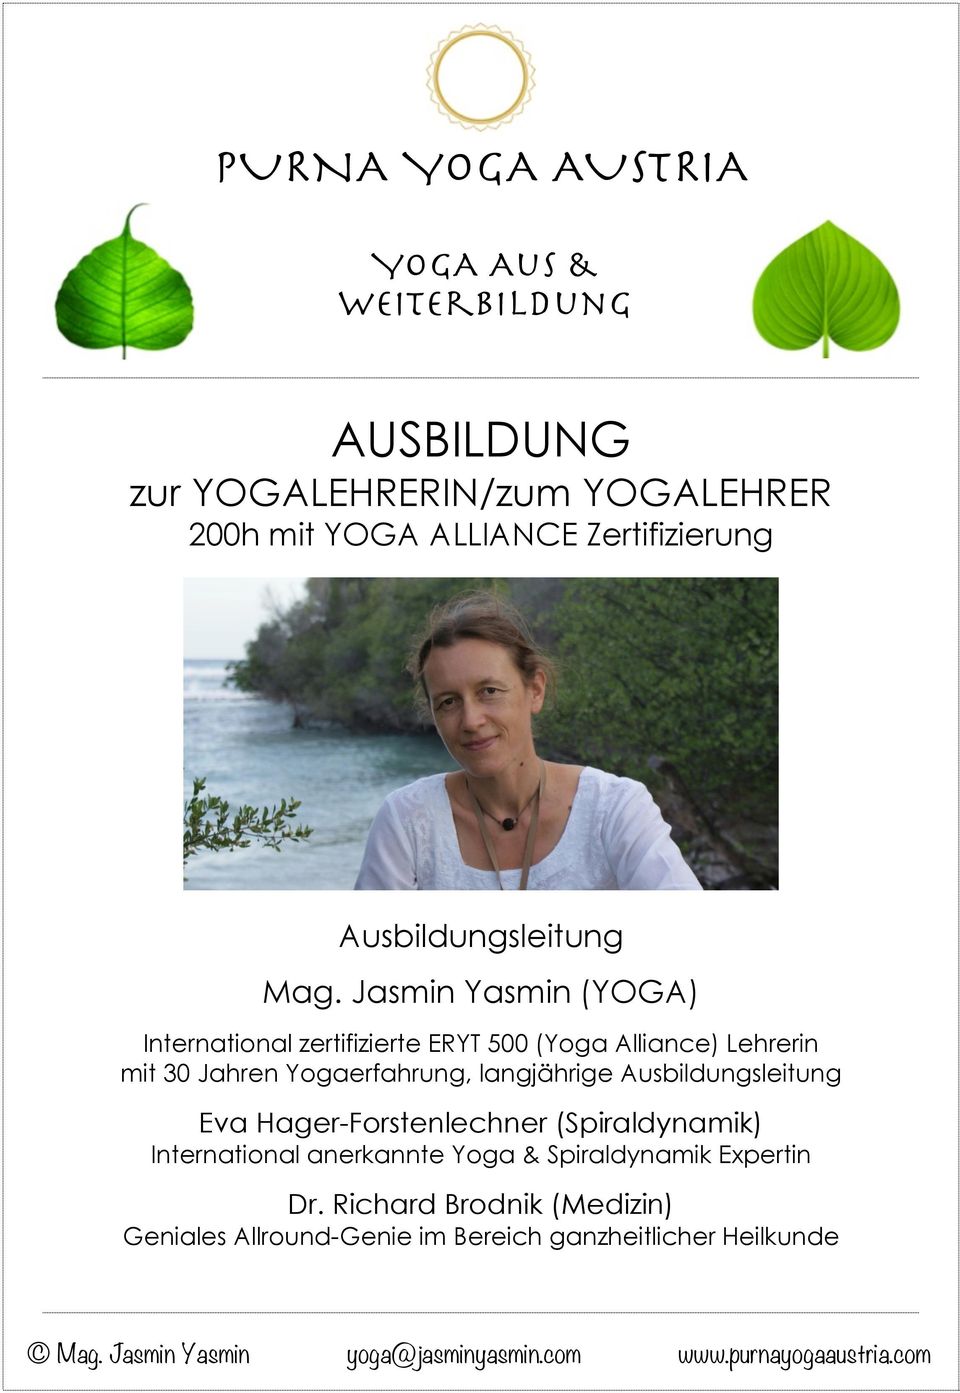 Jasmin Yasmin (YOGA) International zertifizierte ERYT 500 (Yoga Alliance) Lehrerin mit 30 Jahren Yogaerfahrung, langjährige